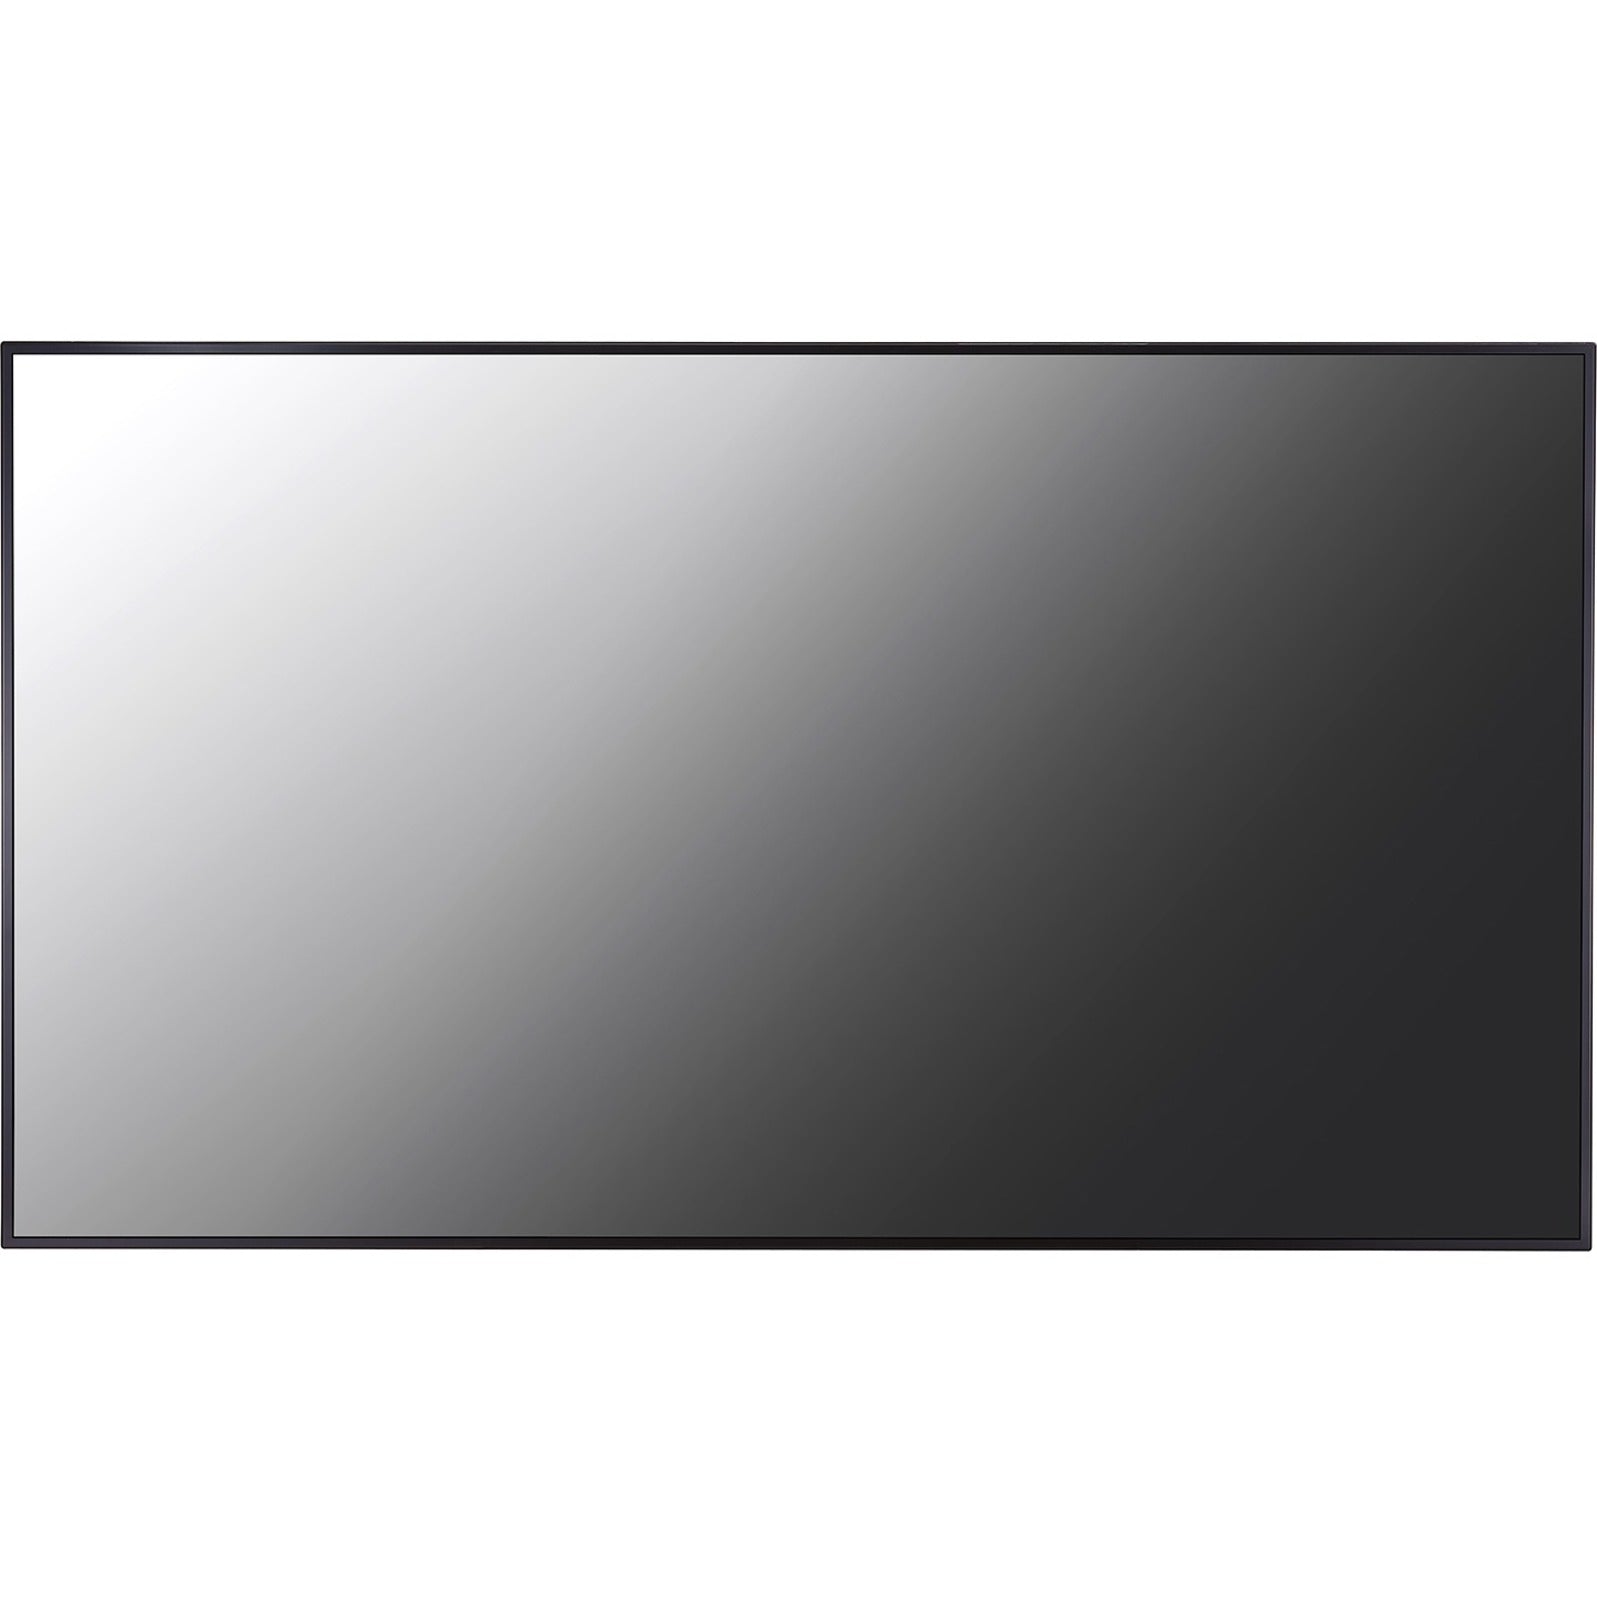 LG 86UH5F-H Ultra HD 86-inch Digital Signage Display, WebOS, 500 Nit Brightness, 10-bit Color Depth, 72% NTSC Color Gamut, 2160p Scan Format, 1,000,000:1 Dynamic Contrast Ratio